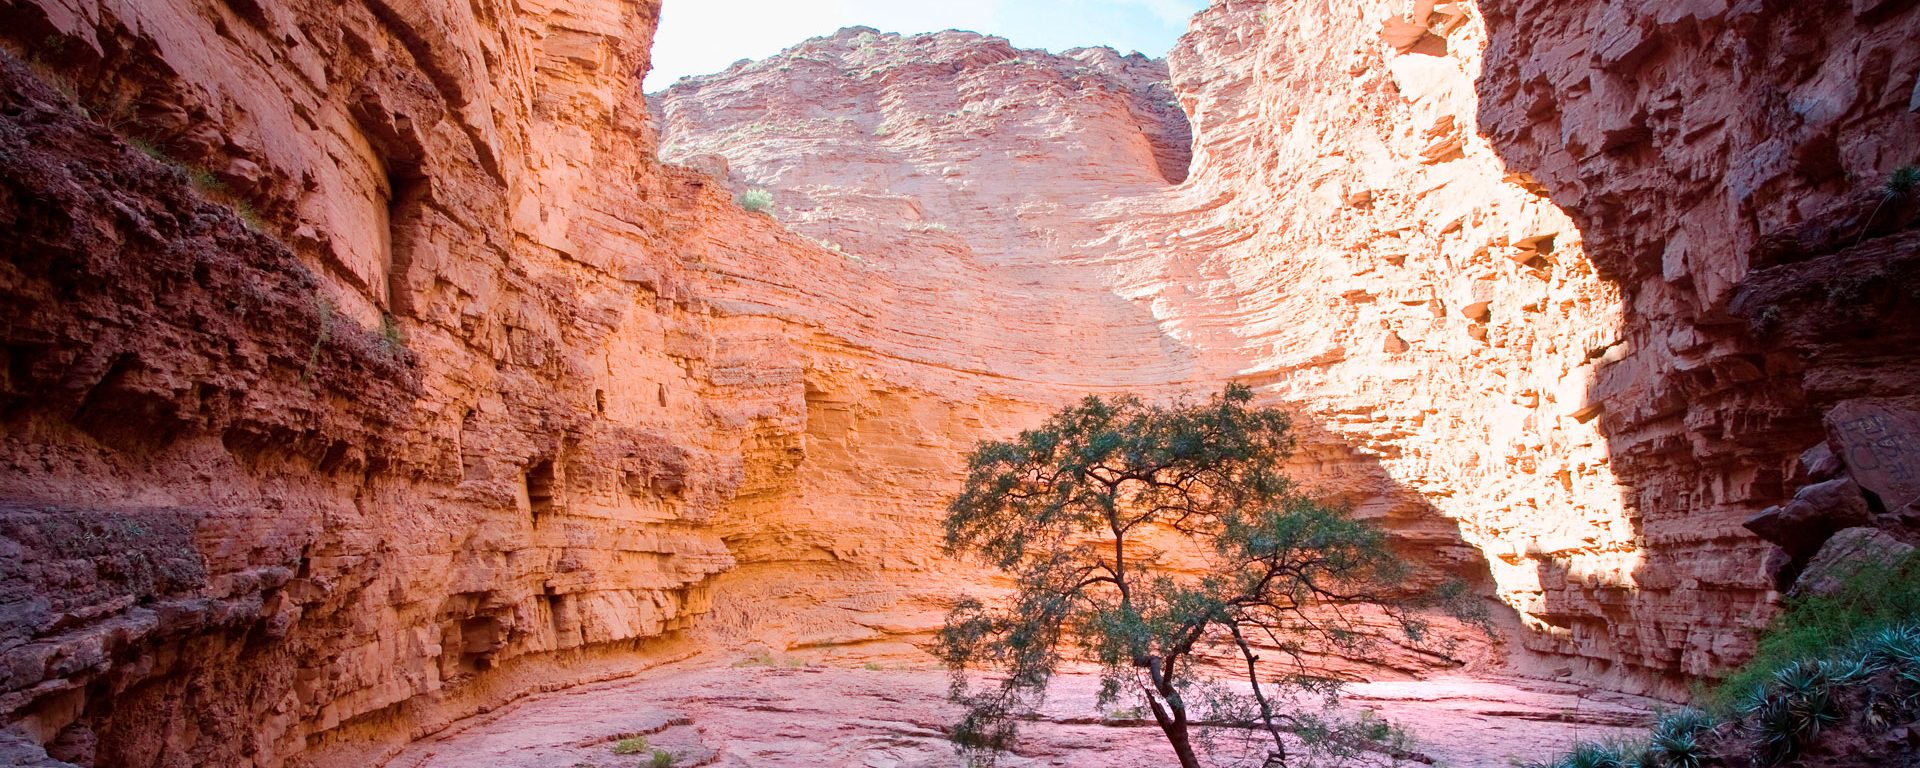 A tree stands in the Garganta del Diablo canyon near Salta, Argentina